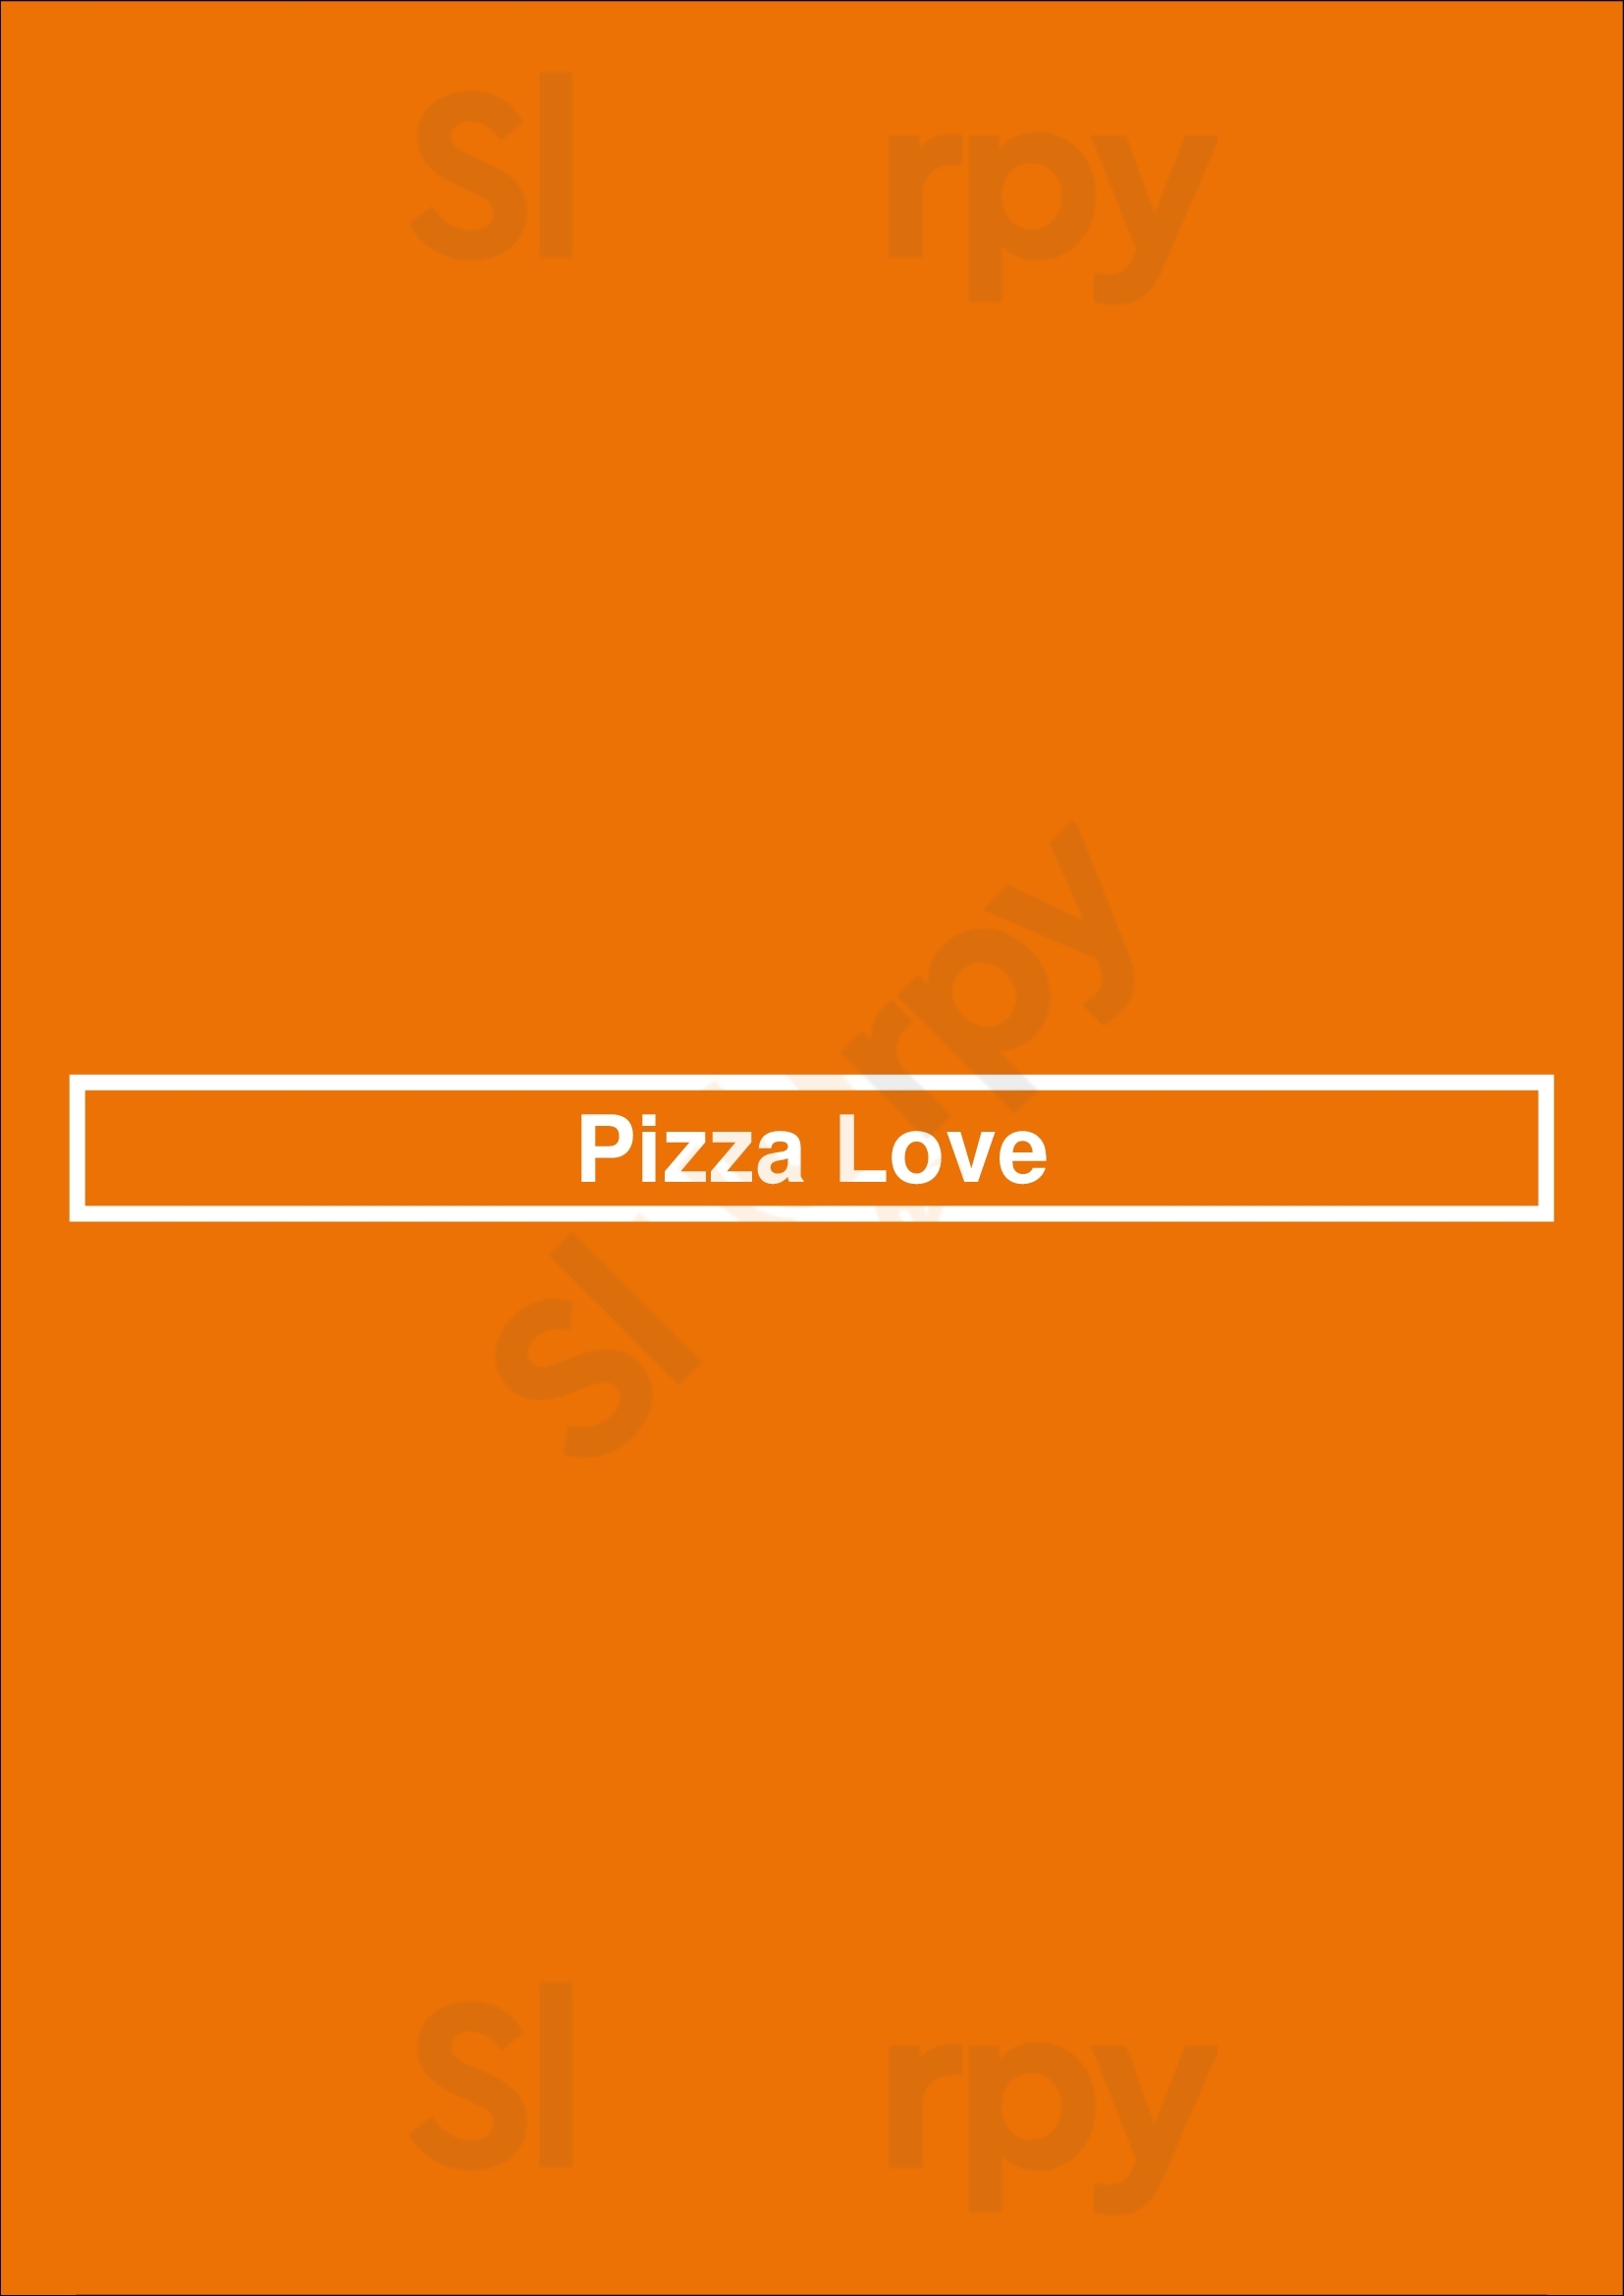 Pizza Love Houston Menu - 1